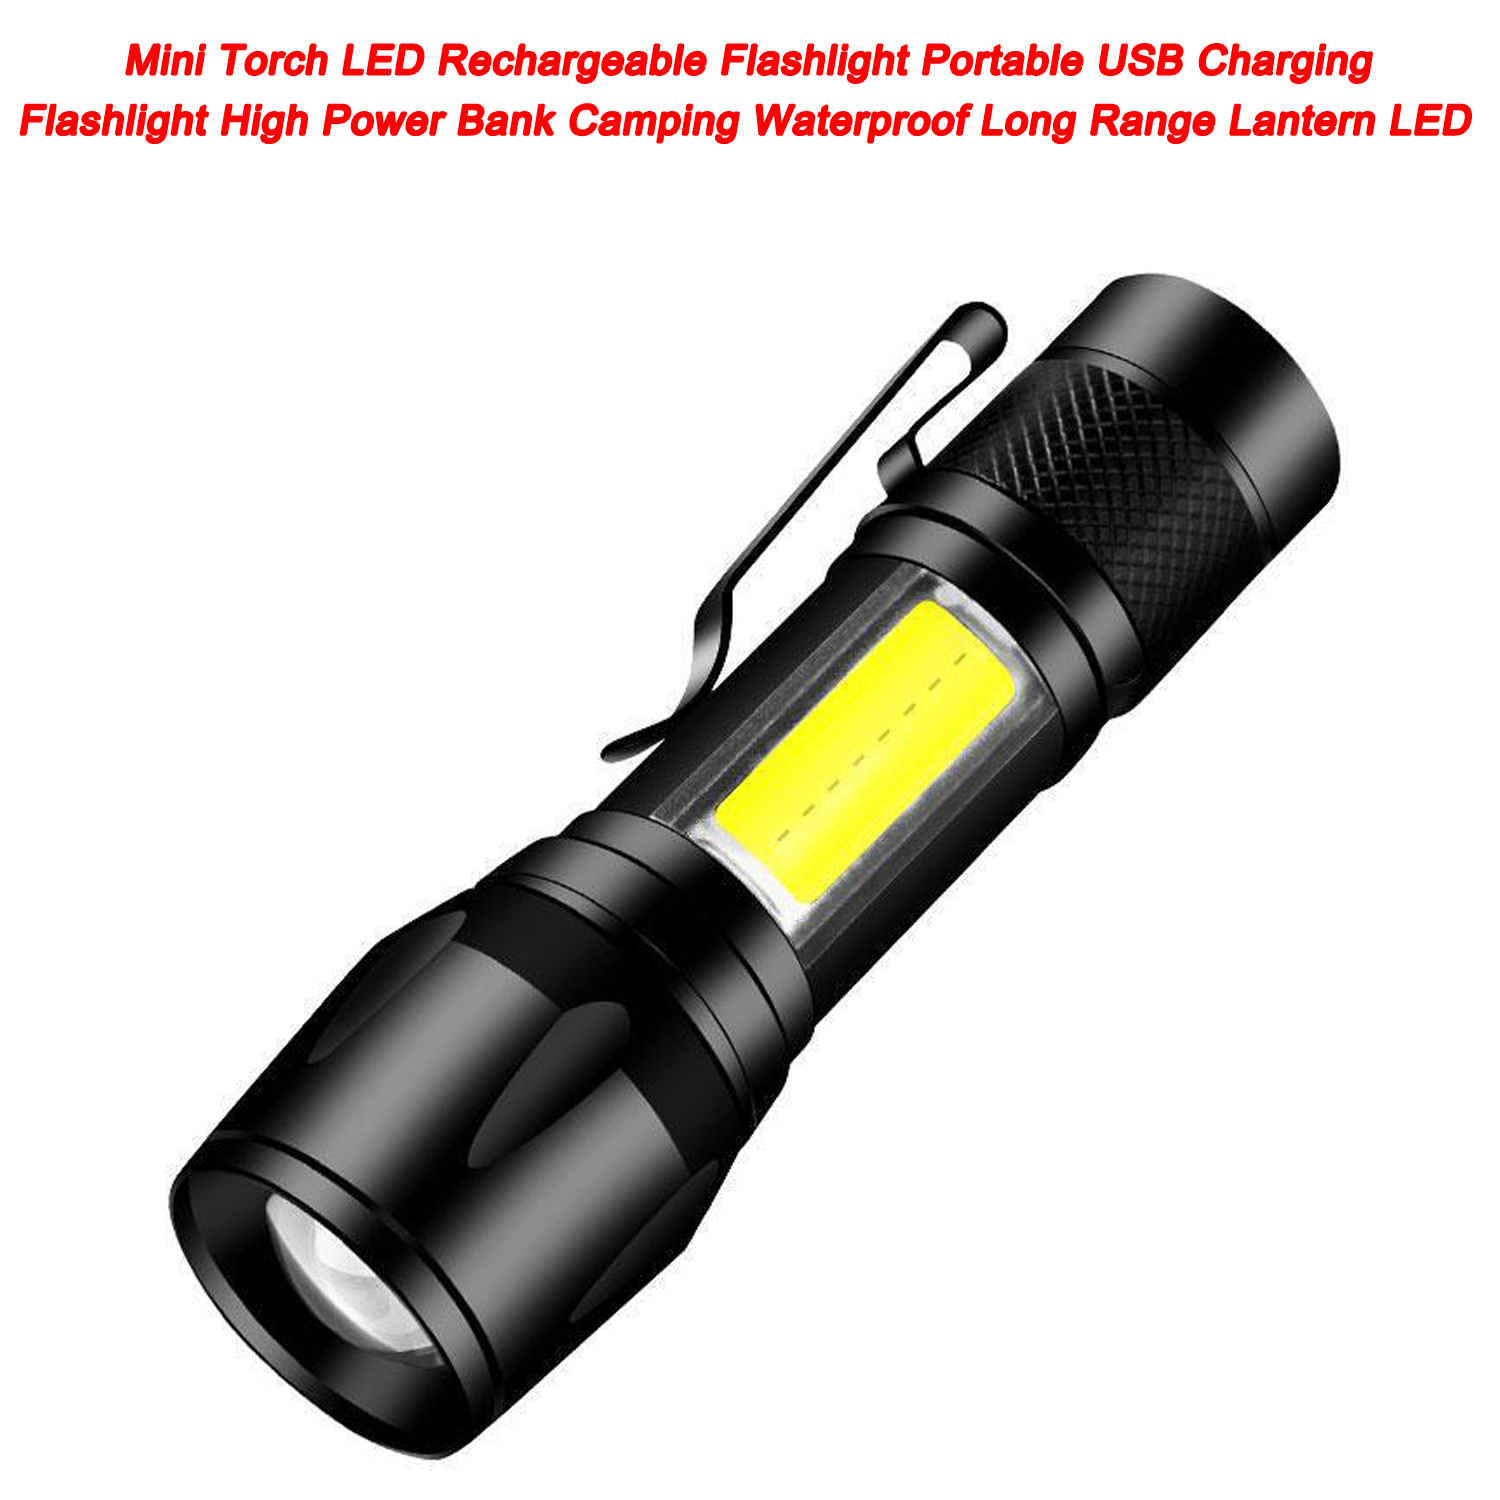 Mini Torch LED Rechargeable Flashlight Portable USB Charging Flashlight High Power Bank Camping Waterproof Long Range Lantern LED